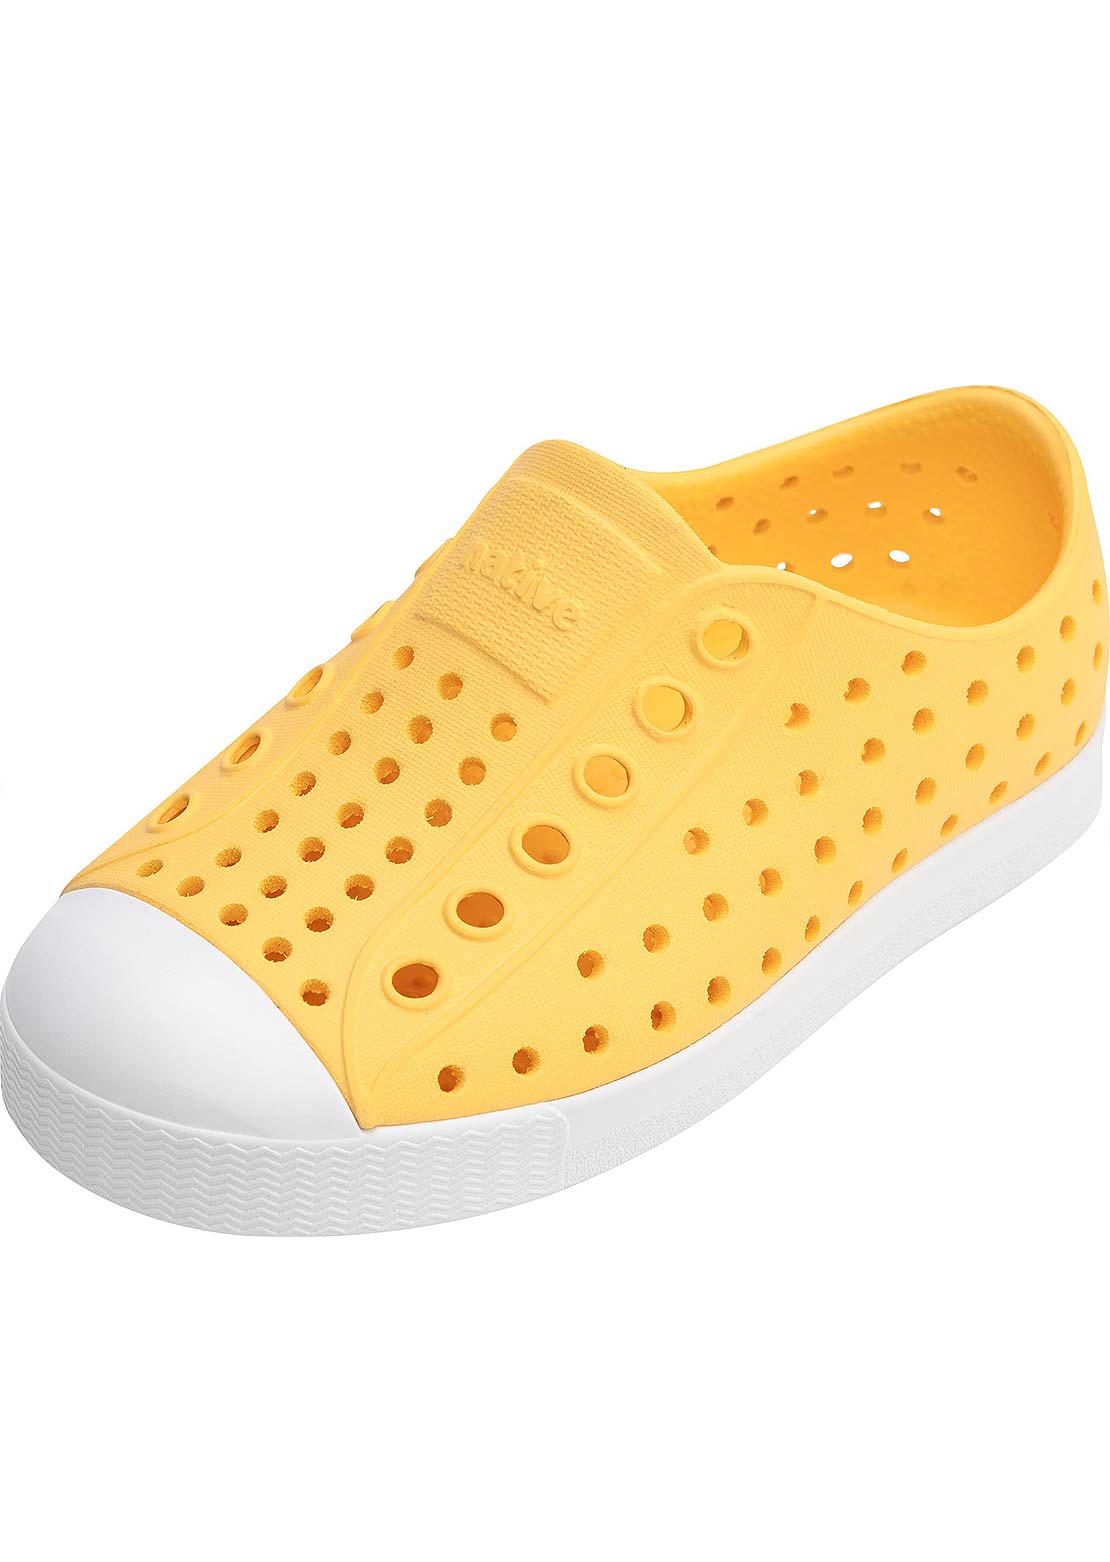 Native Junior Jefferson Shoes Pineapple Yellow/Shell White